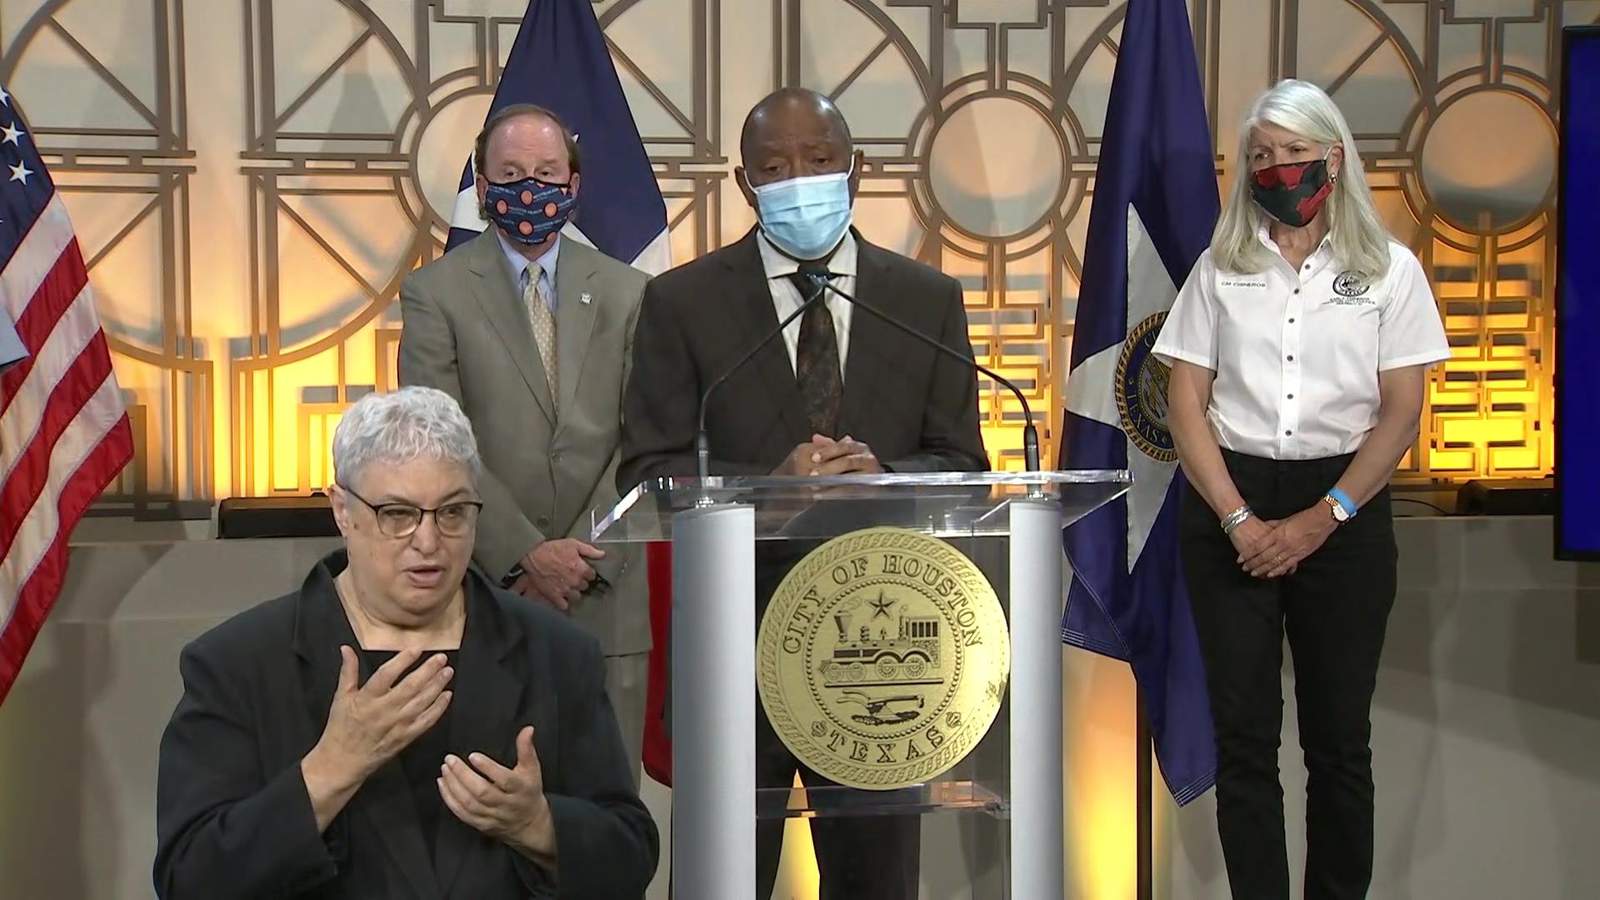 WATCH LIVE: Mayor Turner gives update on Houstons coronavirus response